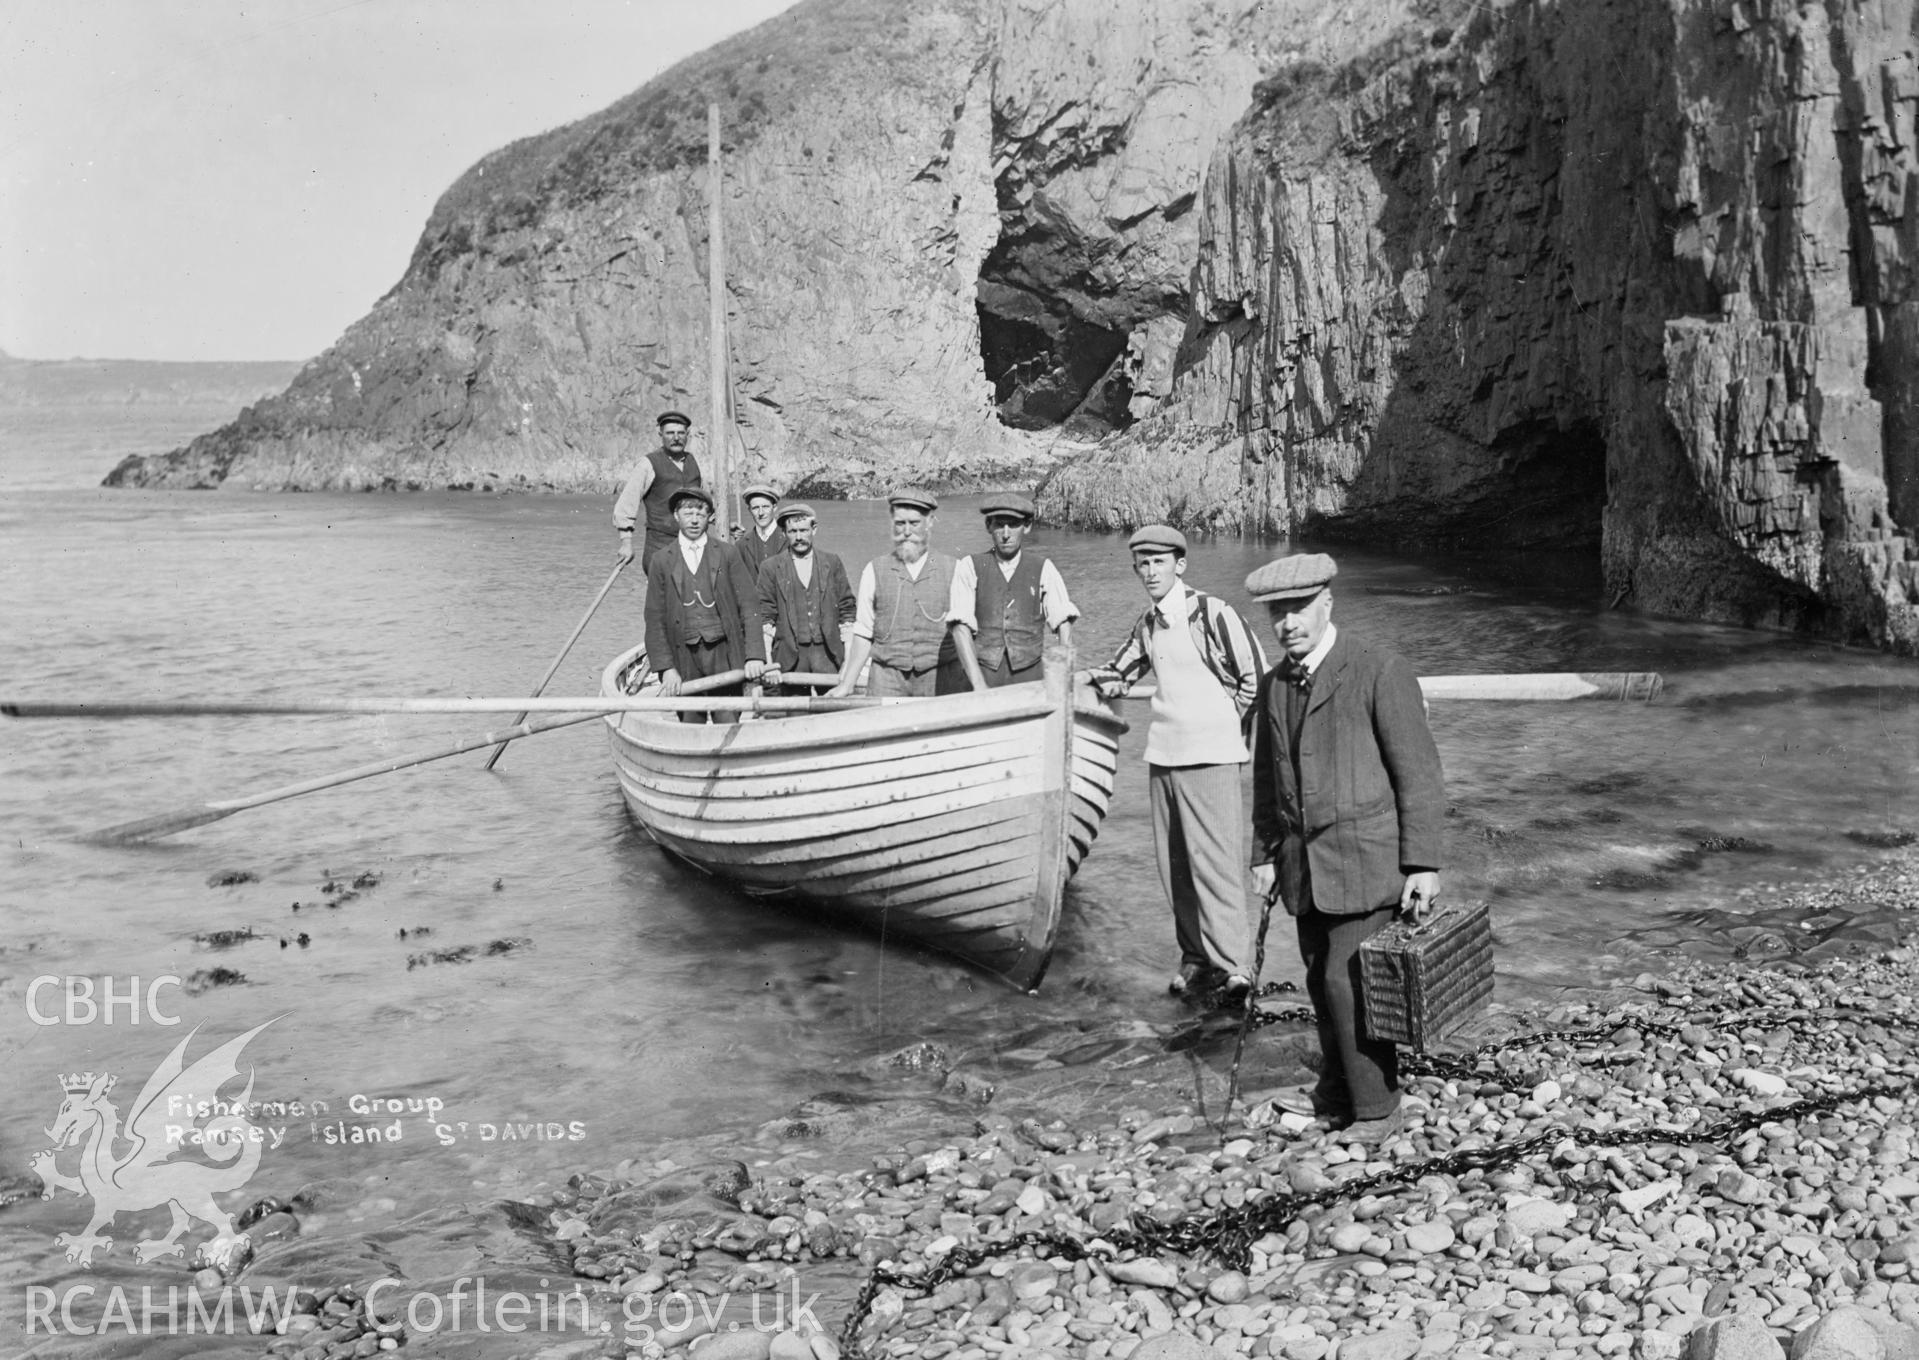 Black and white glass negative showing "Fishermen Group Ramsey Island St Davids"